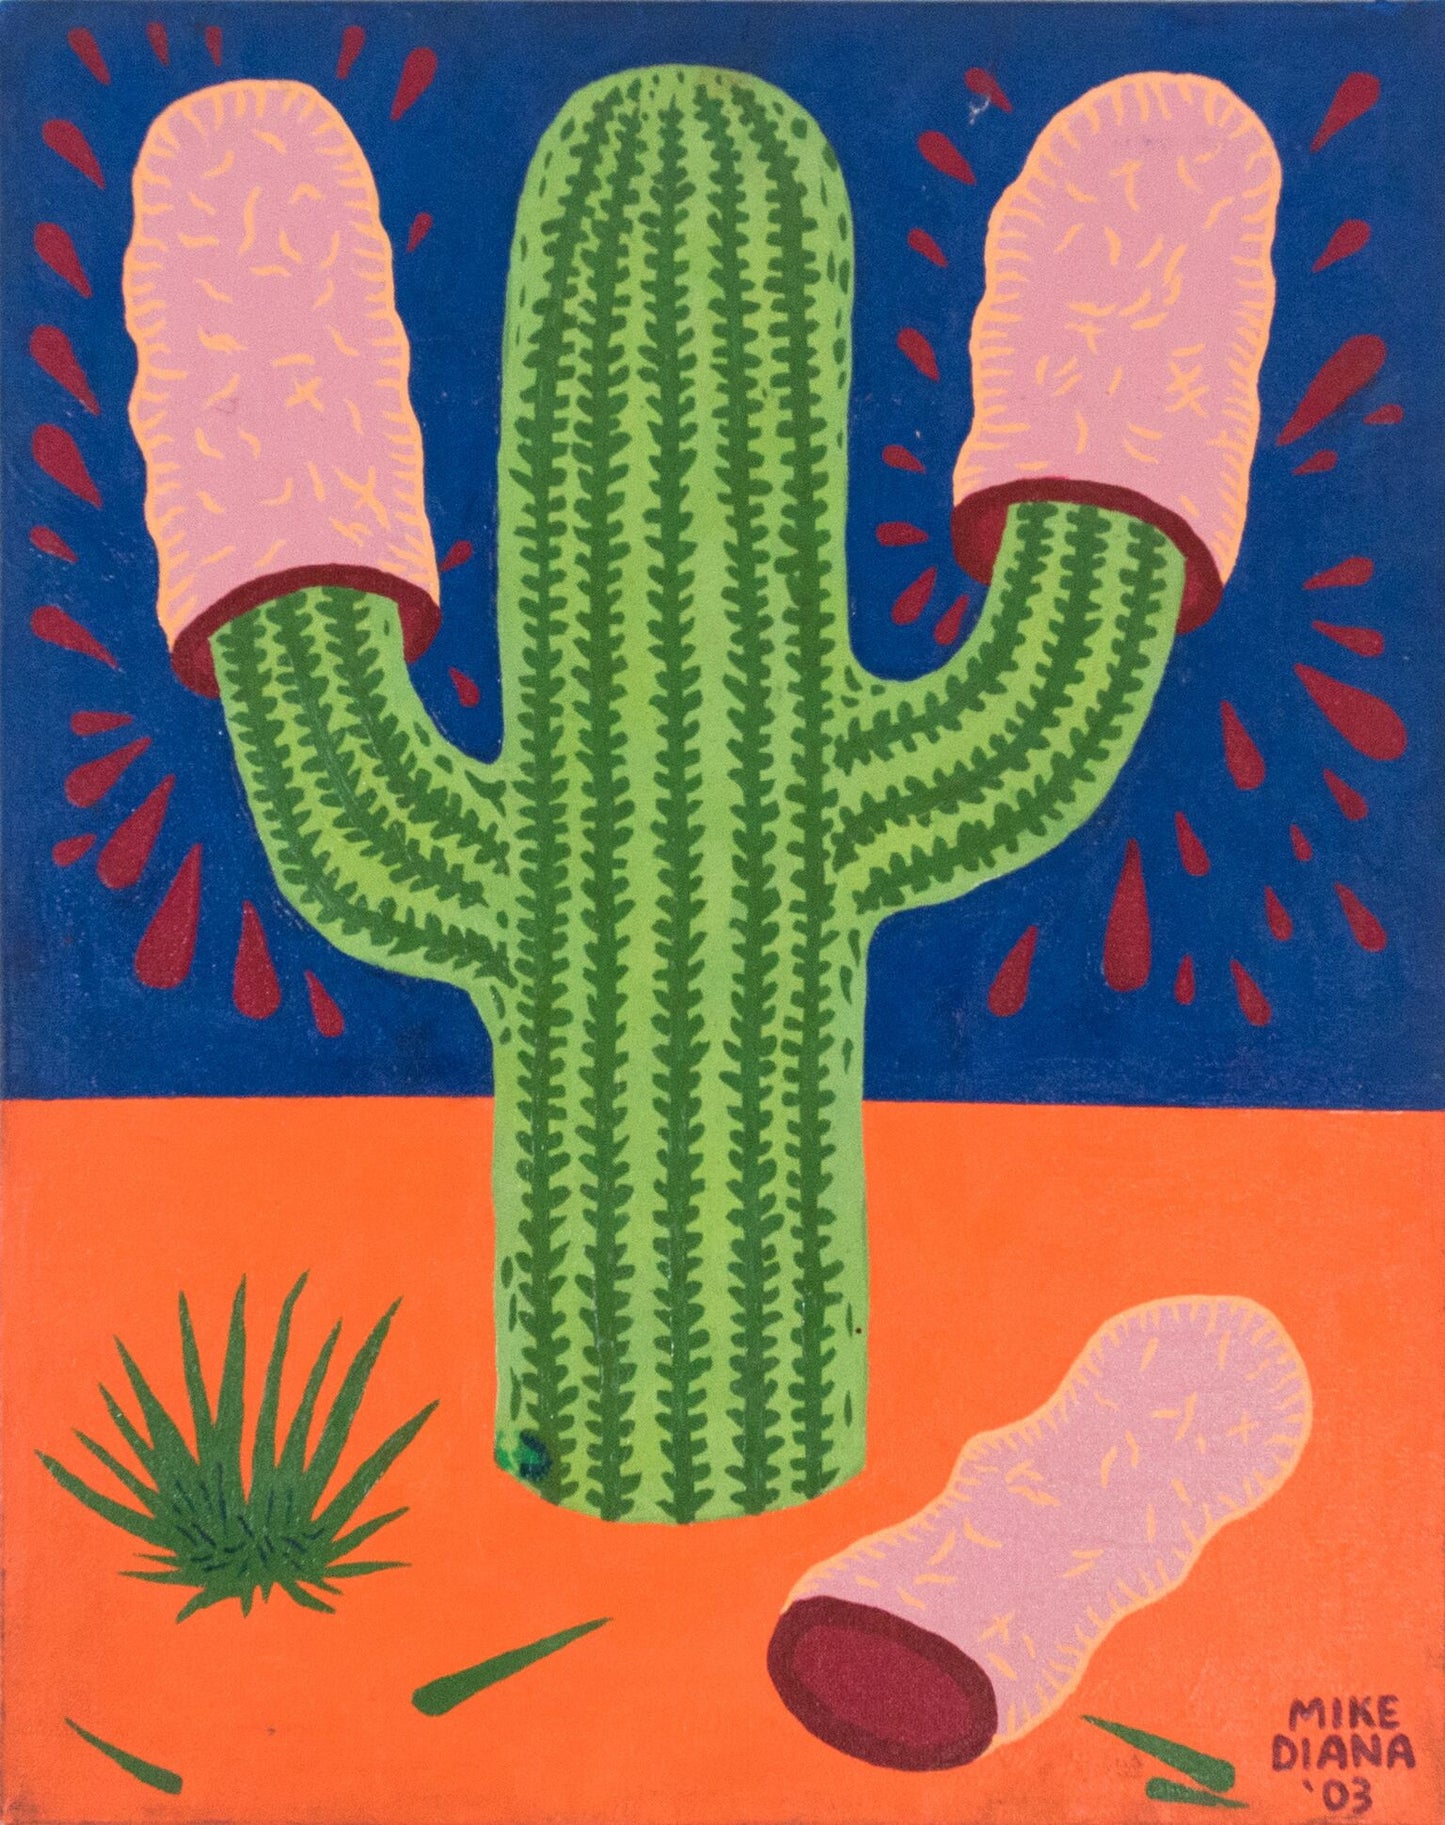 Mike Diana - Cactus